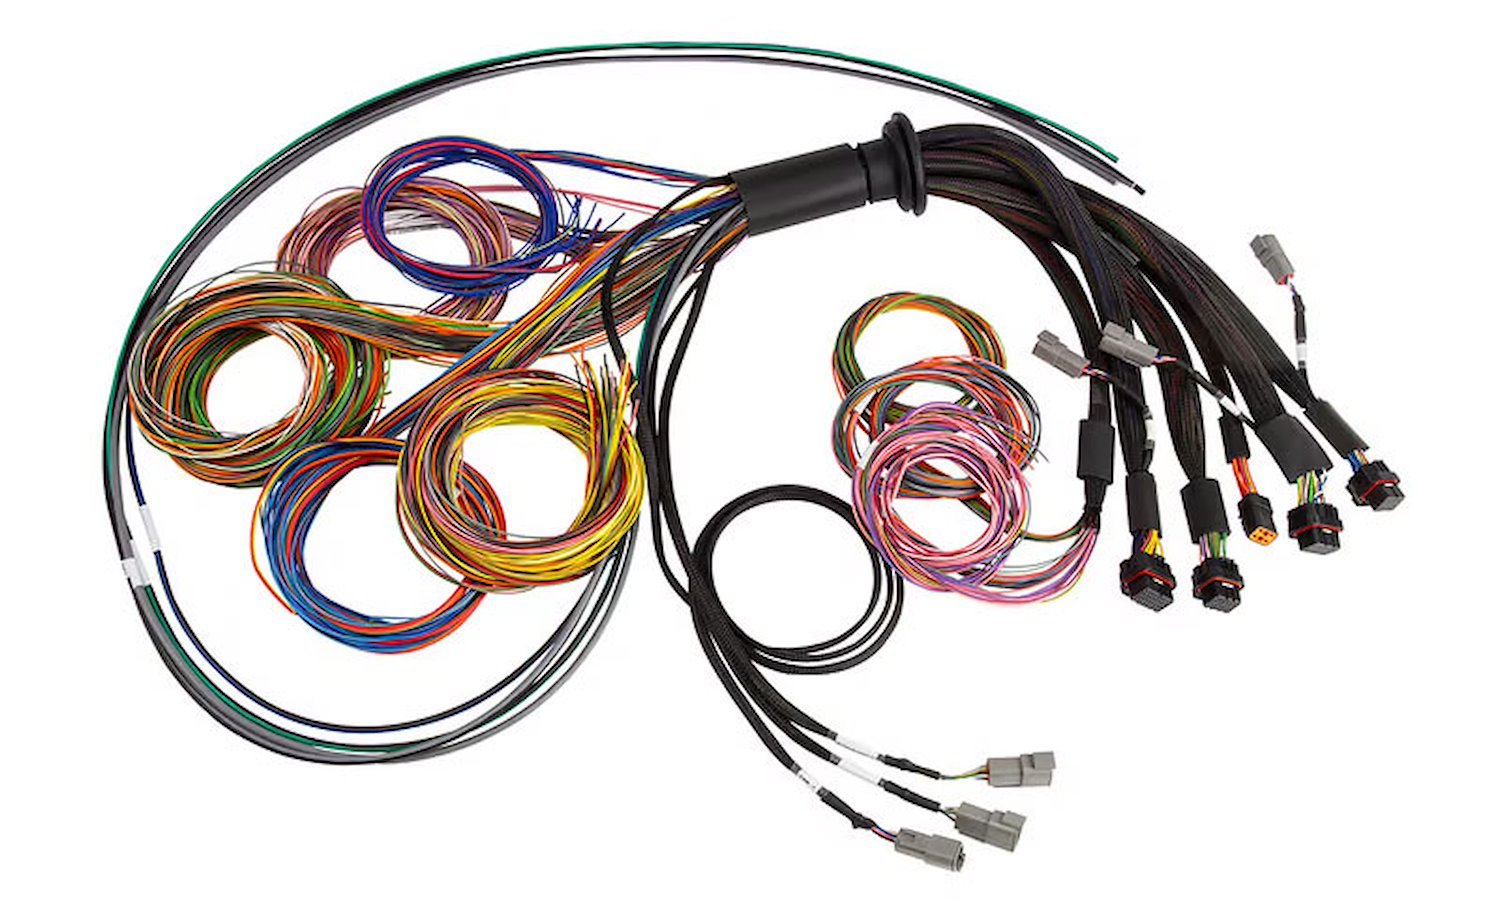 HT-185201 Nexus R5 Basic Universal Wire-In Harness, 5m (16')